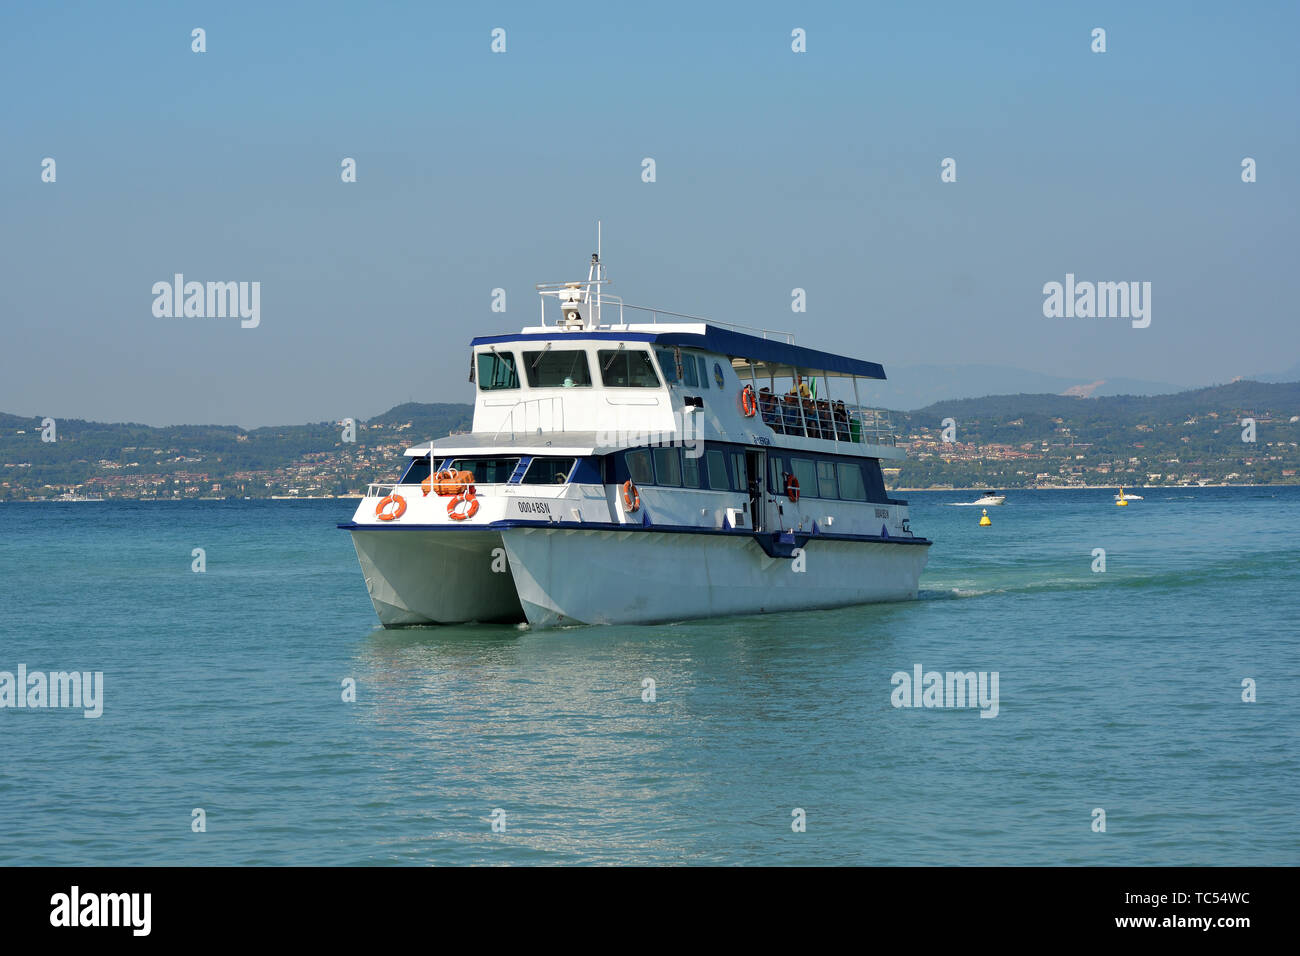 Passenger ship on the way to Desenzano del Garda on Lake Garda - Italy. Stock Photo